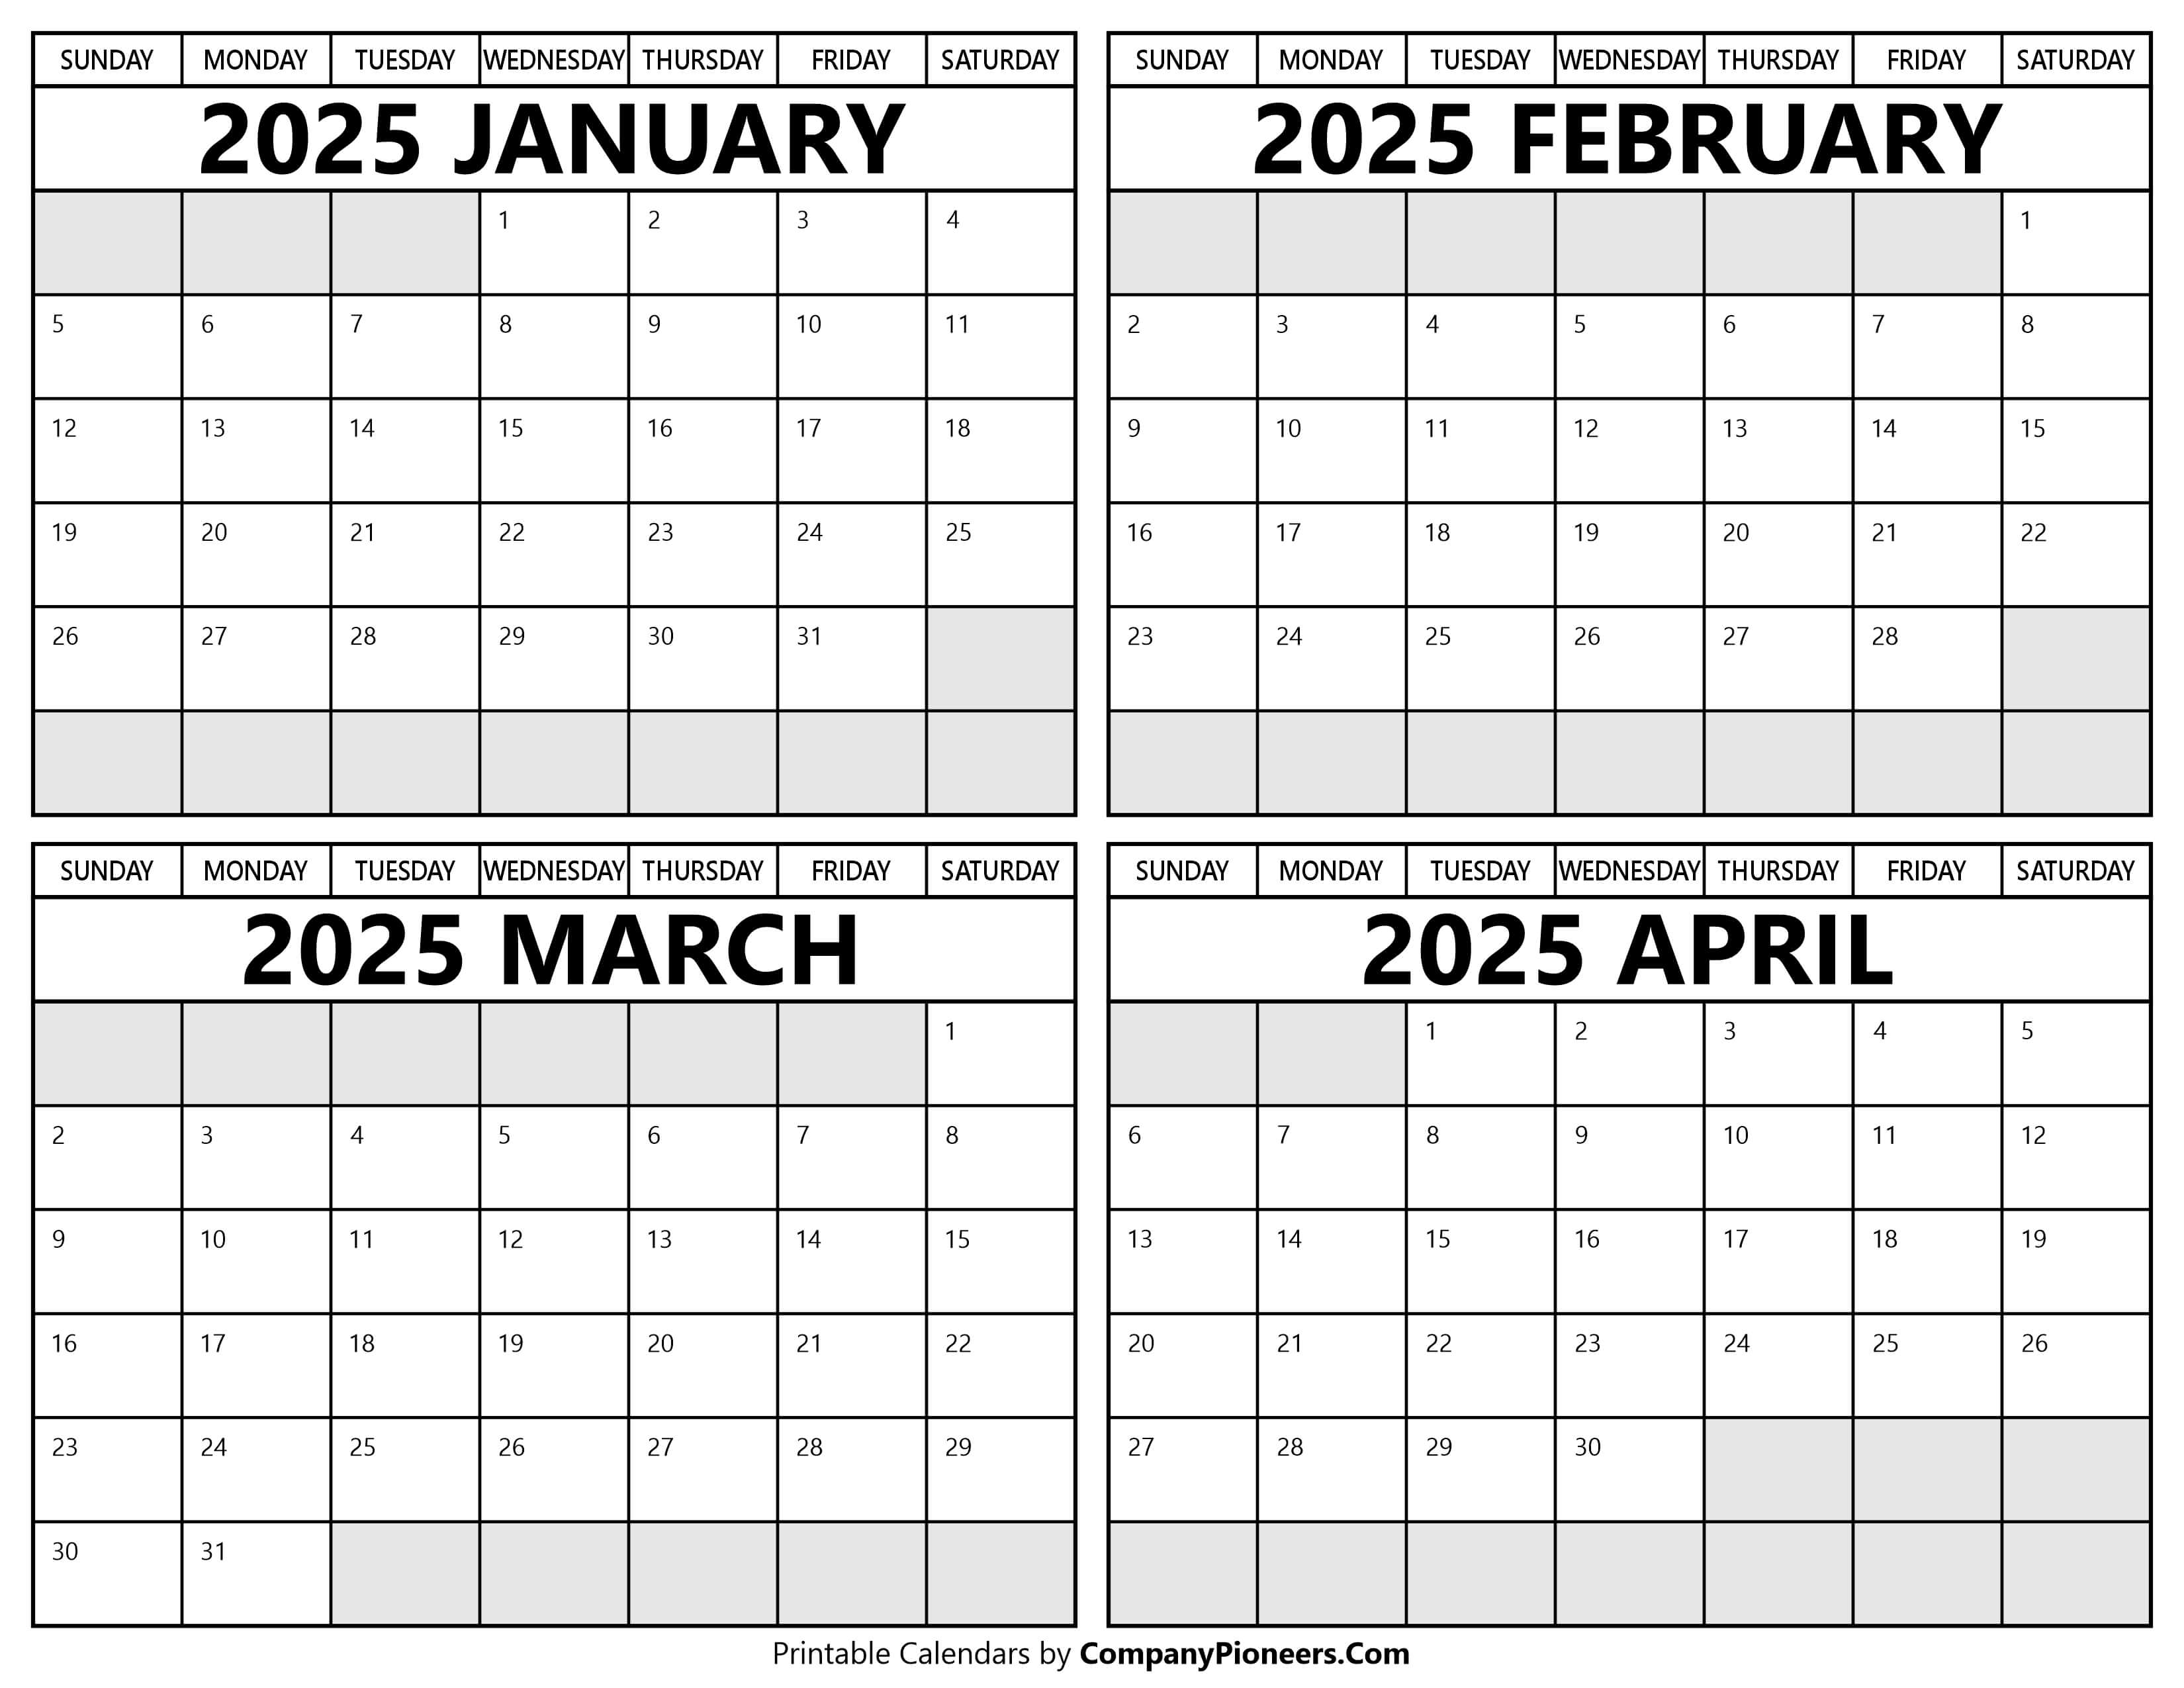 Printable January to April 2025 Calendars